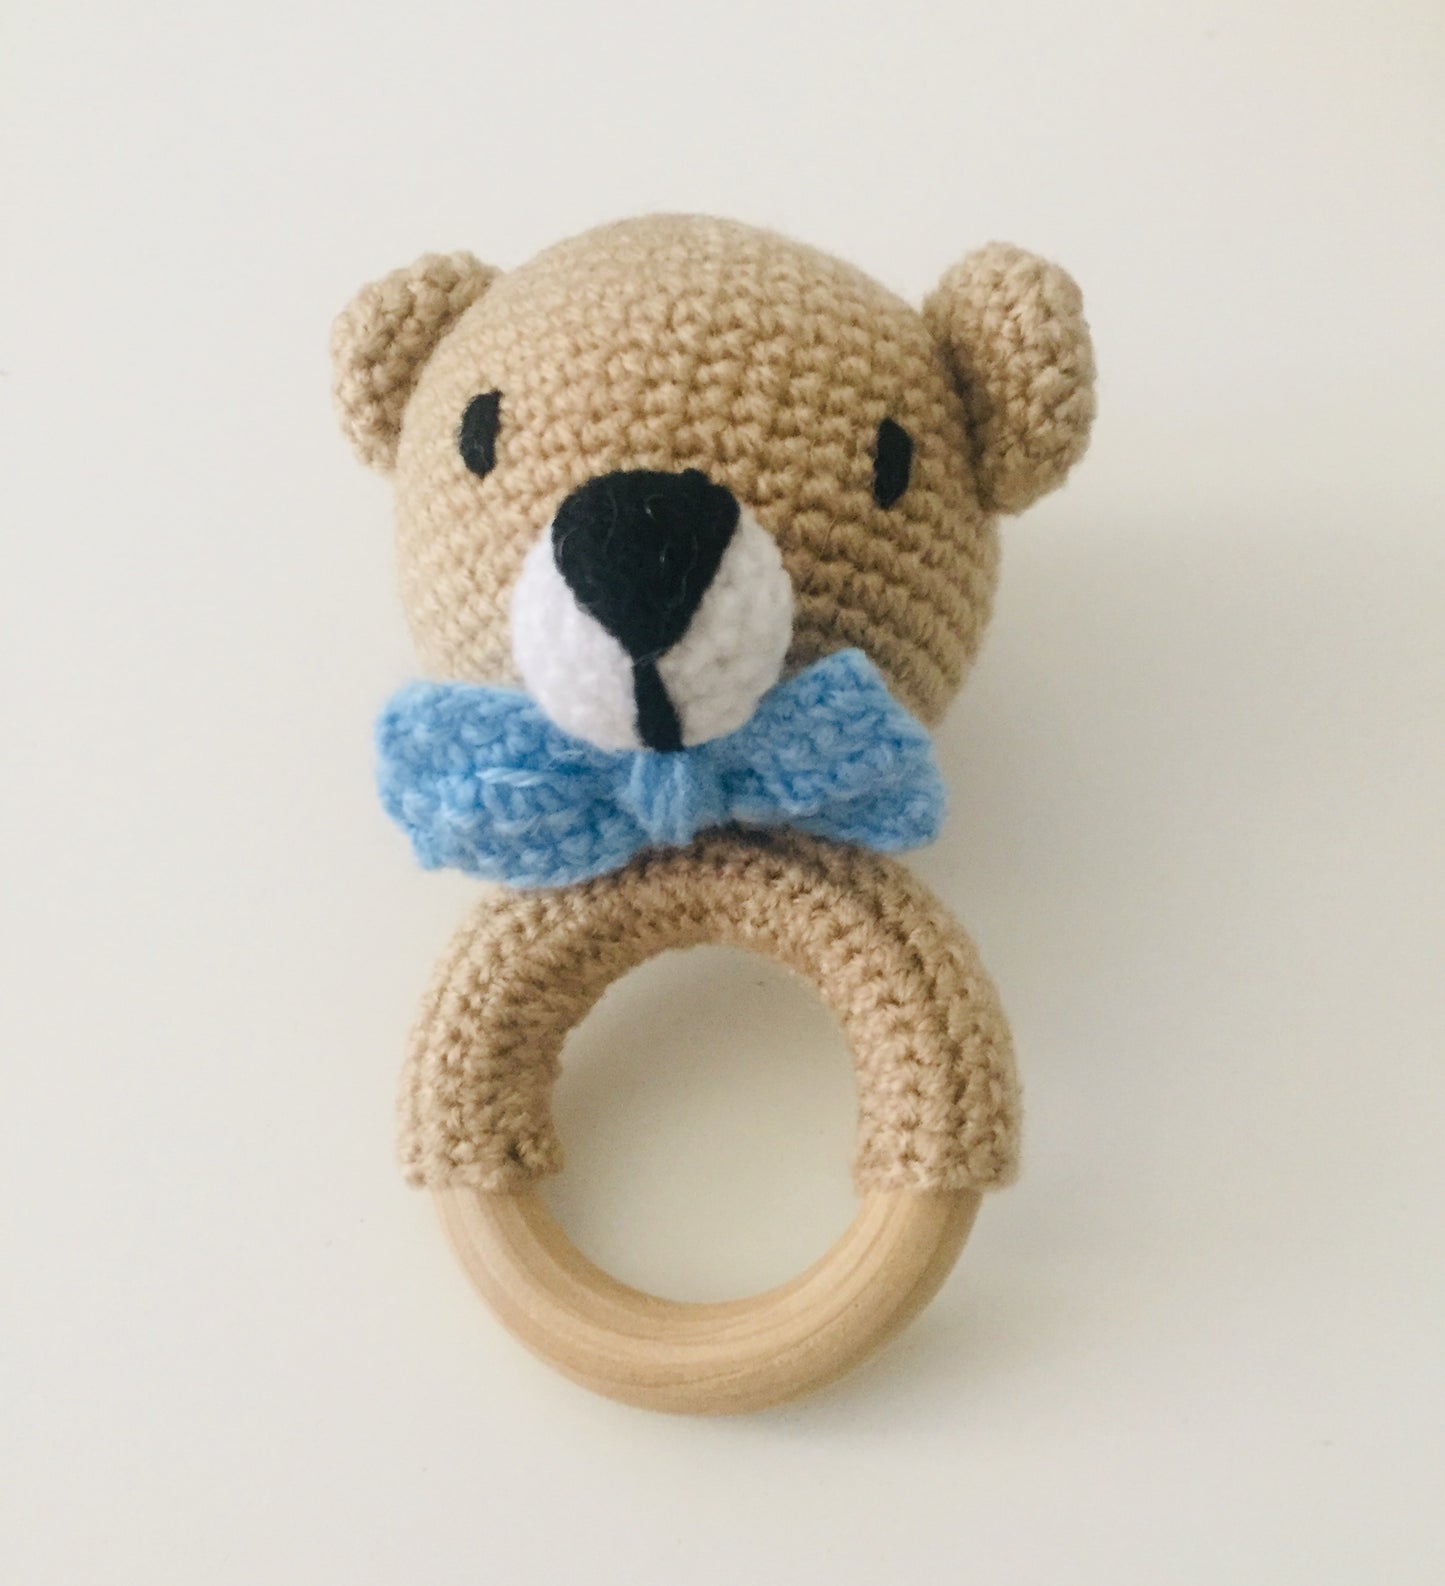 Handmade Crochet Teddy Baby Rattle with cute Bow